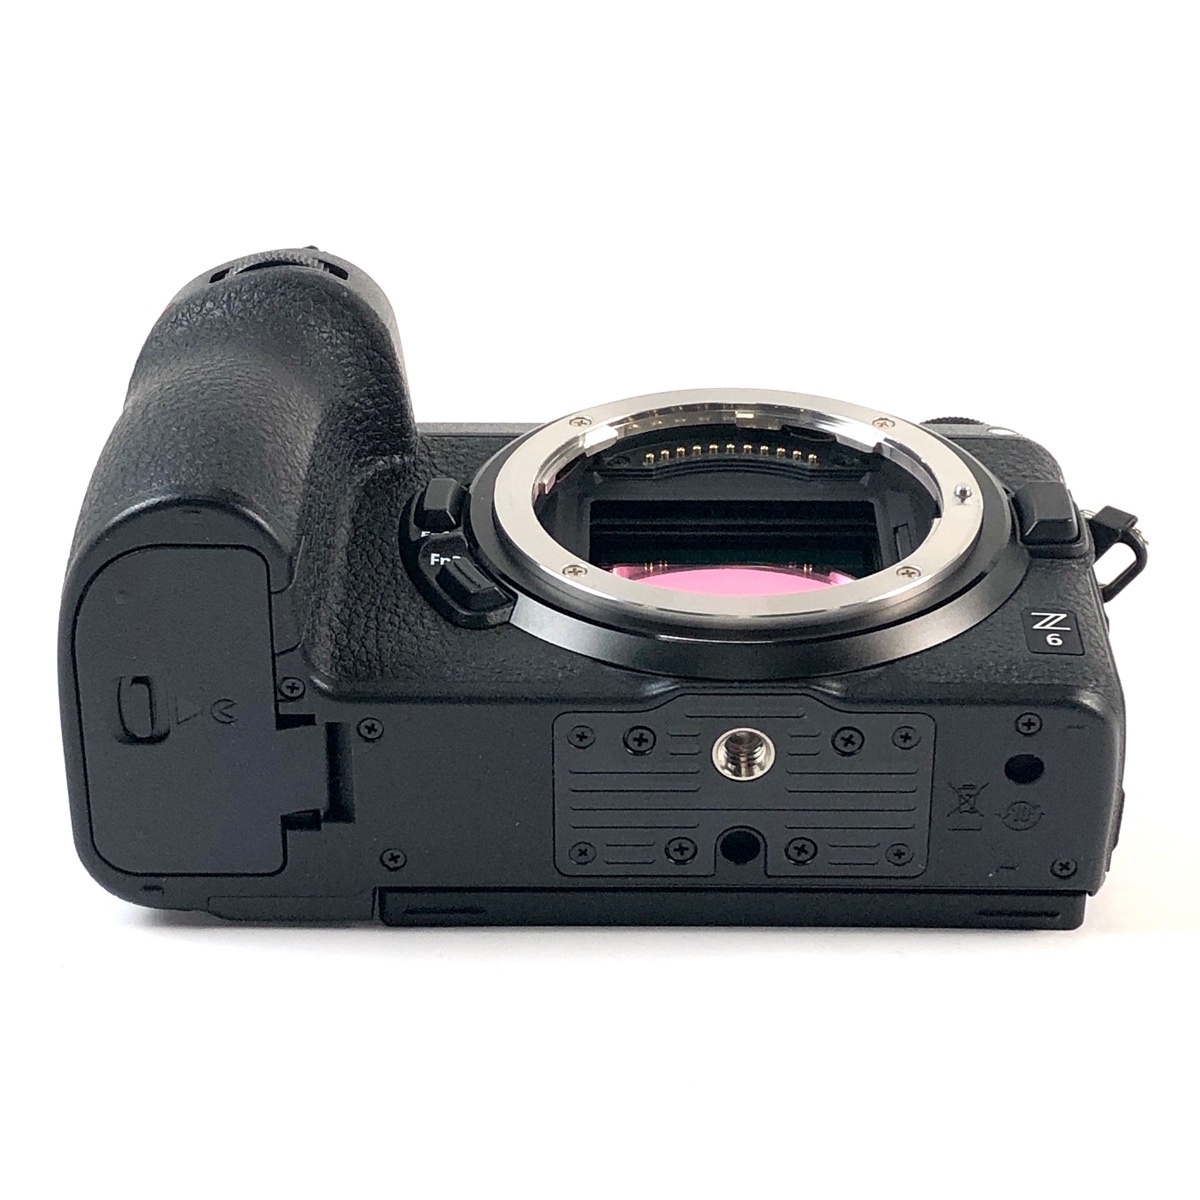  Nikon Nikon Z6 корпус цифровой беззеркальный однообъективный камера [ б/у ]